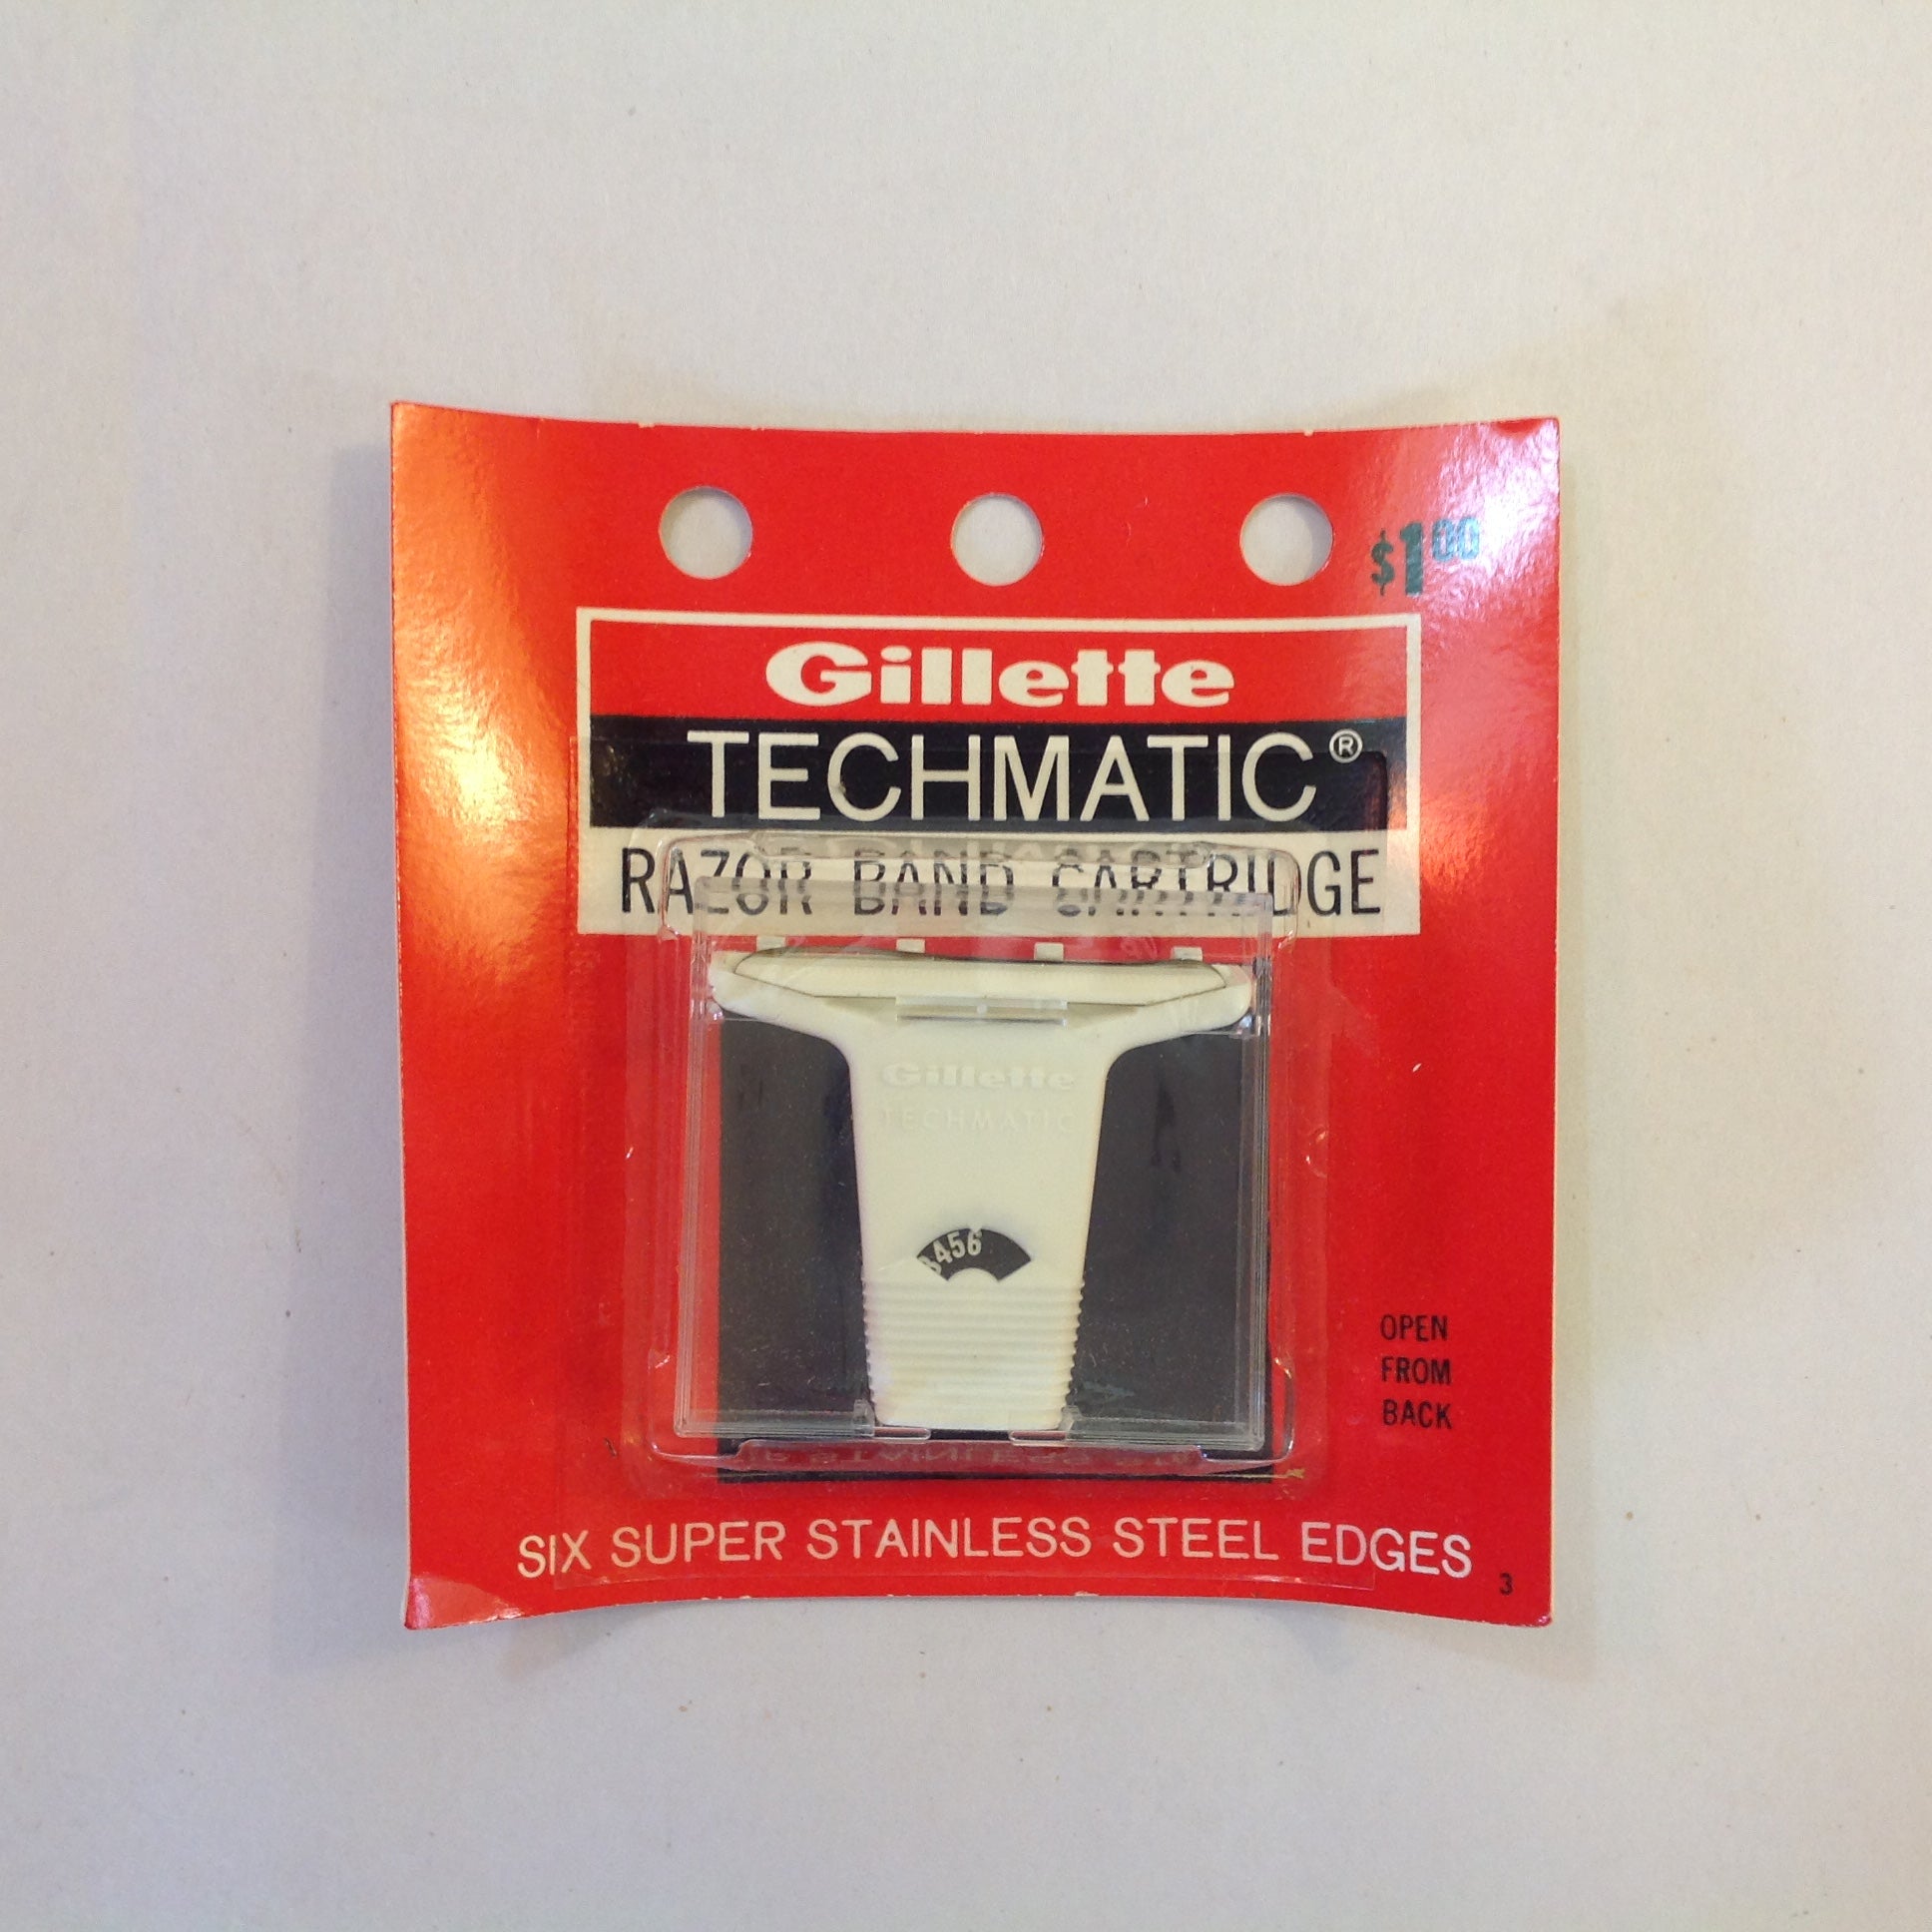 Vintage NOS Gillette Techmatic Razor Band Cartridge Six Super Stainless Steel Edges